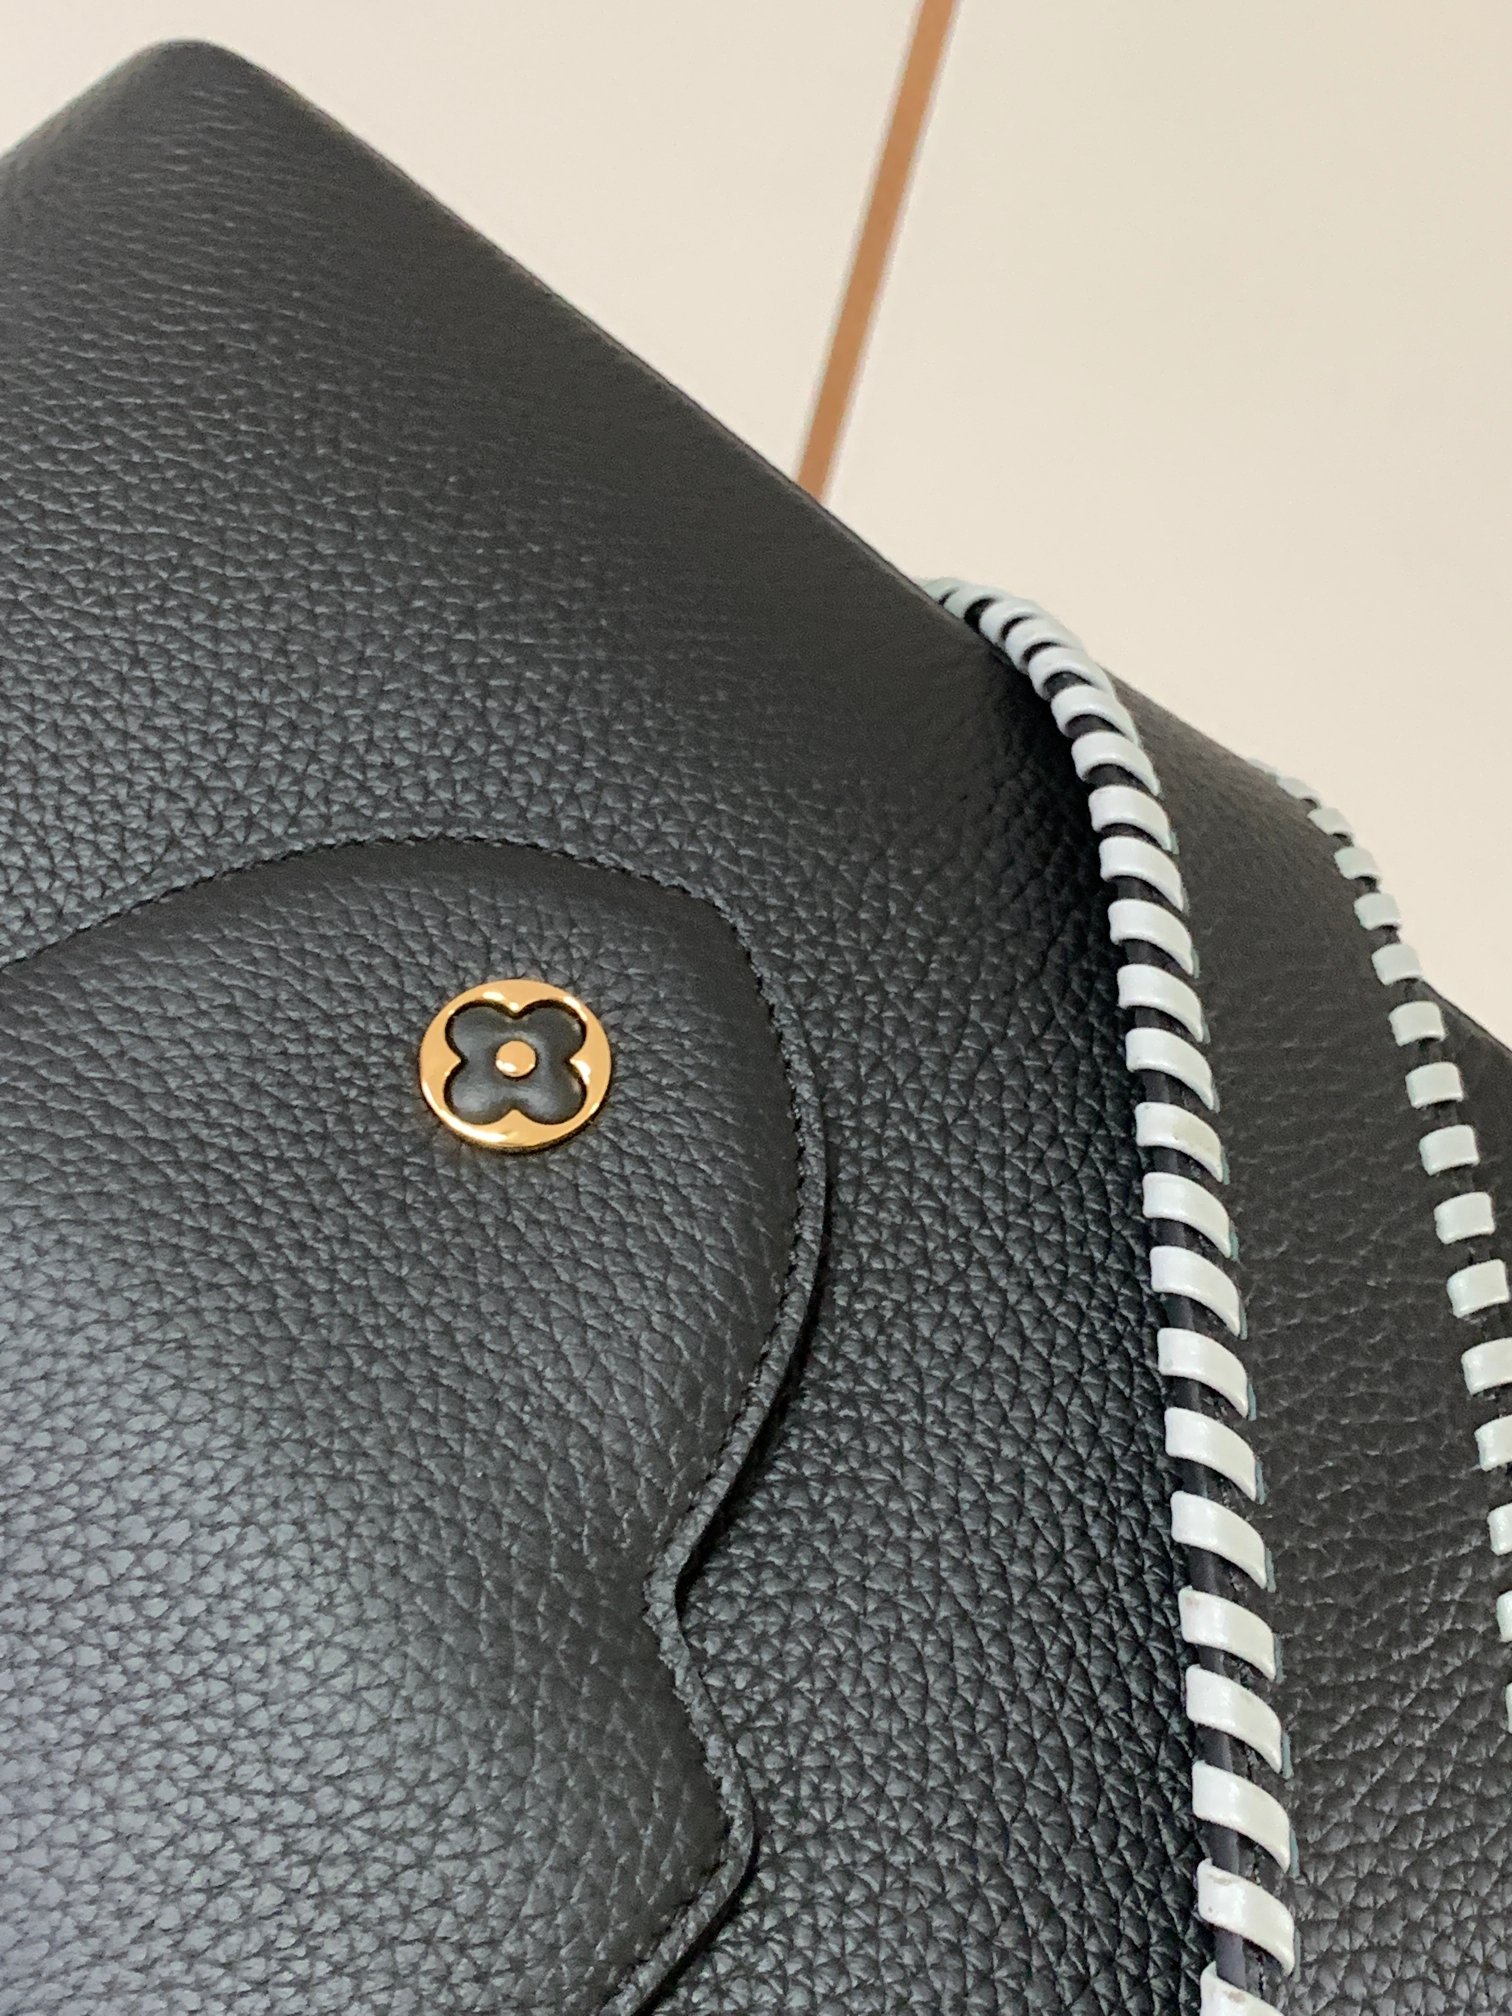 Louis Vuitton Capucines Bag Replica  Bags, Louis vuitton capucines, Lv bag